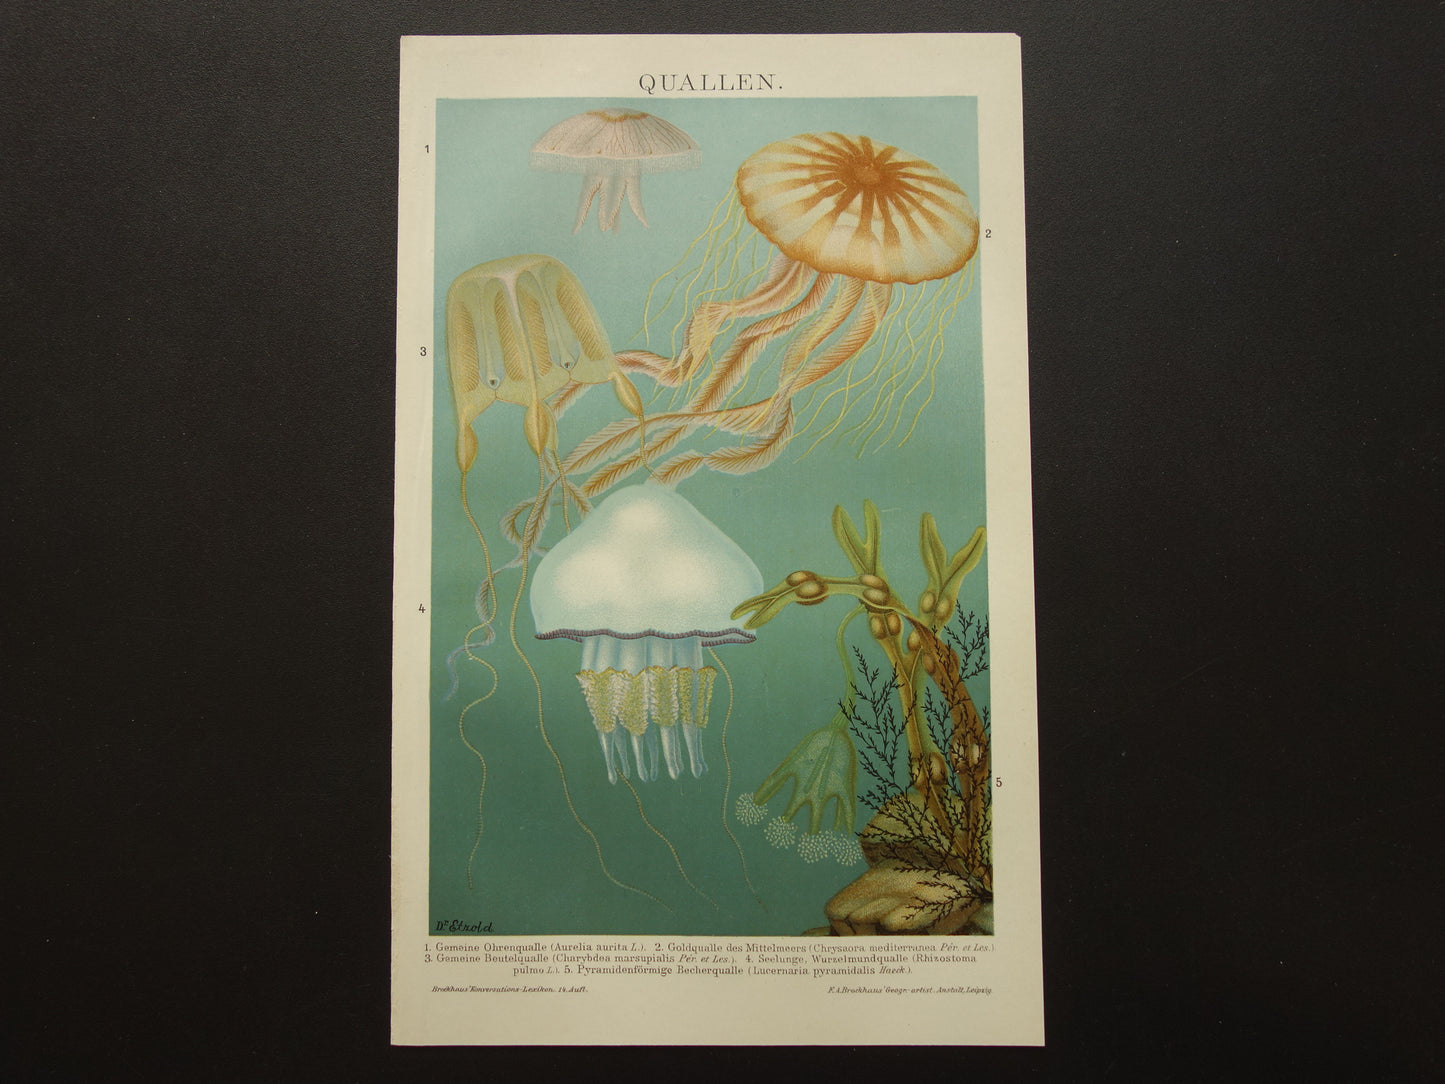 Kwallen antieke prent uit 1908 met illustratie van kwal oorkwal zeepaddestoel originele vintage print kwalsoorten